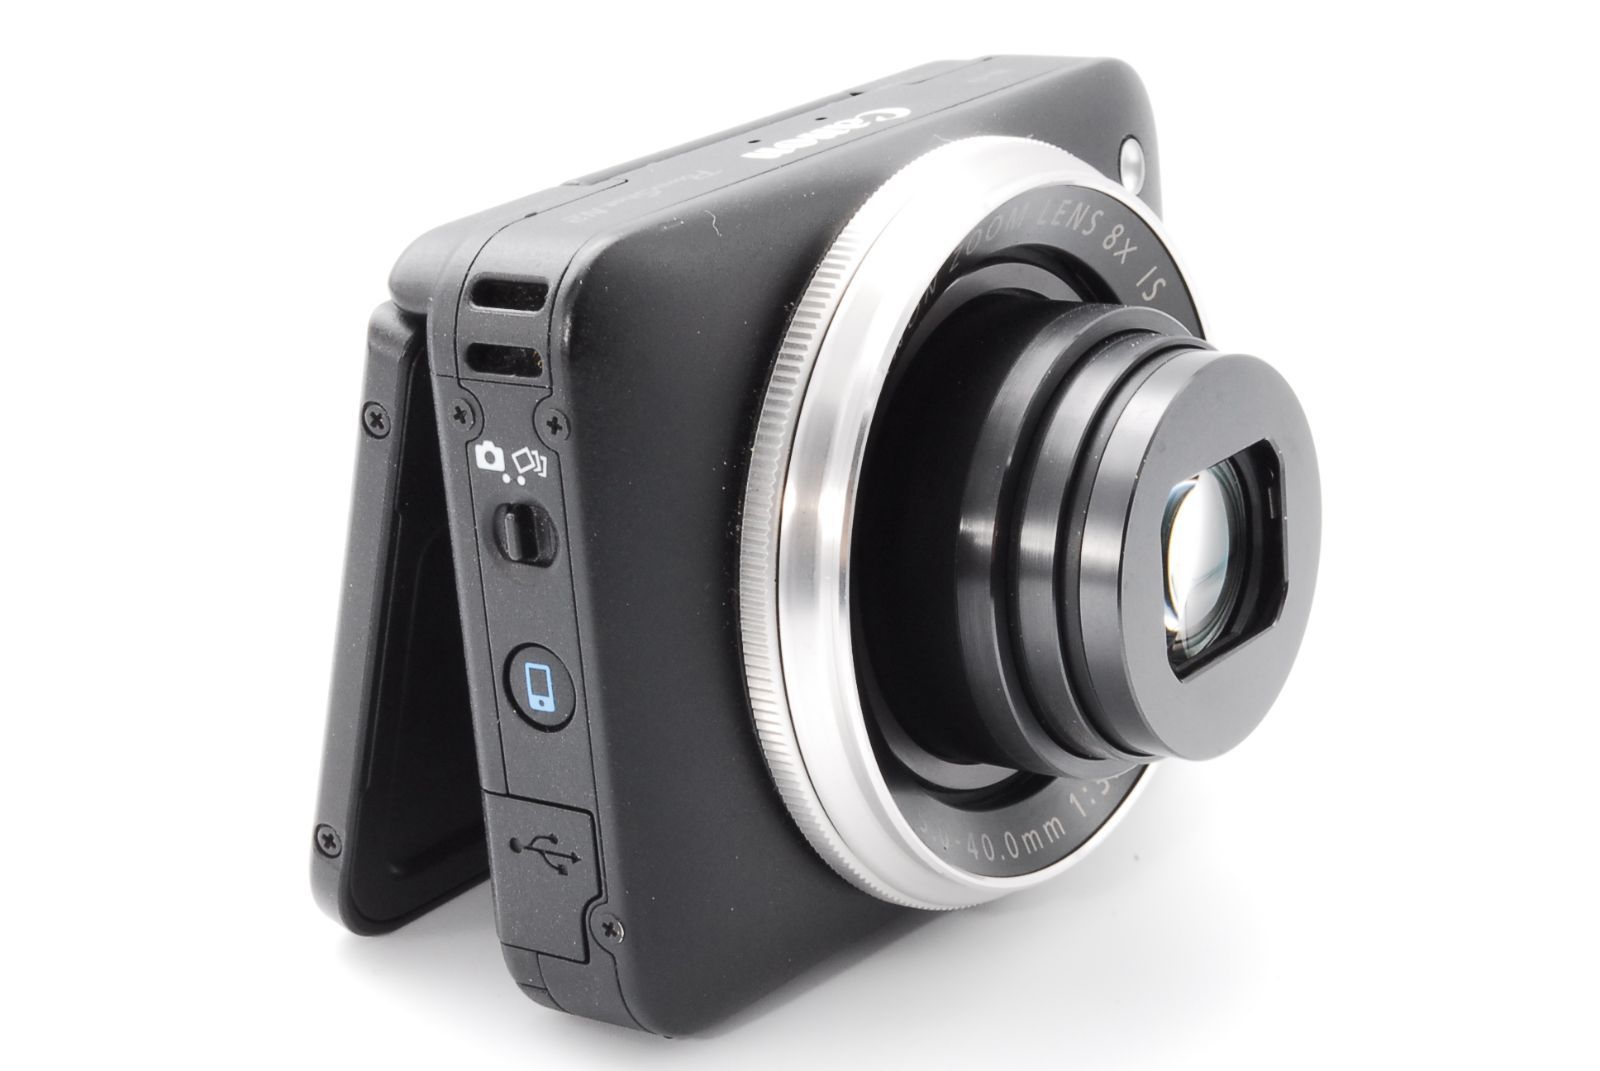 Canon キャノン デジタルカメラ PowerShot N2 自分撮りモード搭載 PSN2